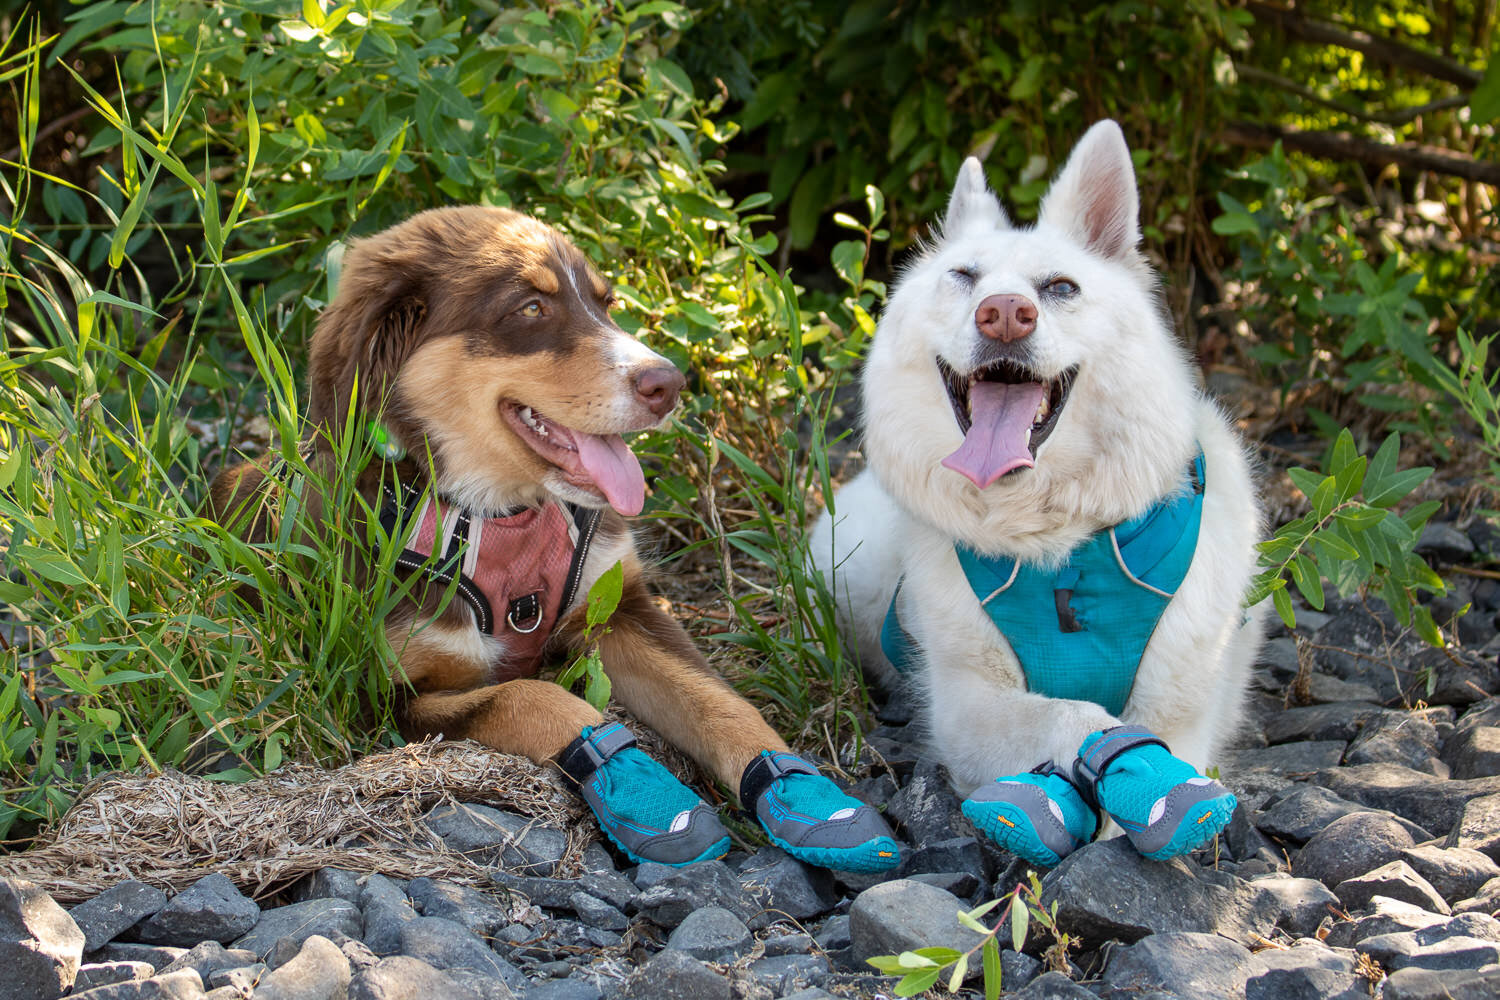 Ruffwear Grip Trex All-Terrain Dog Boots